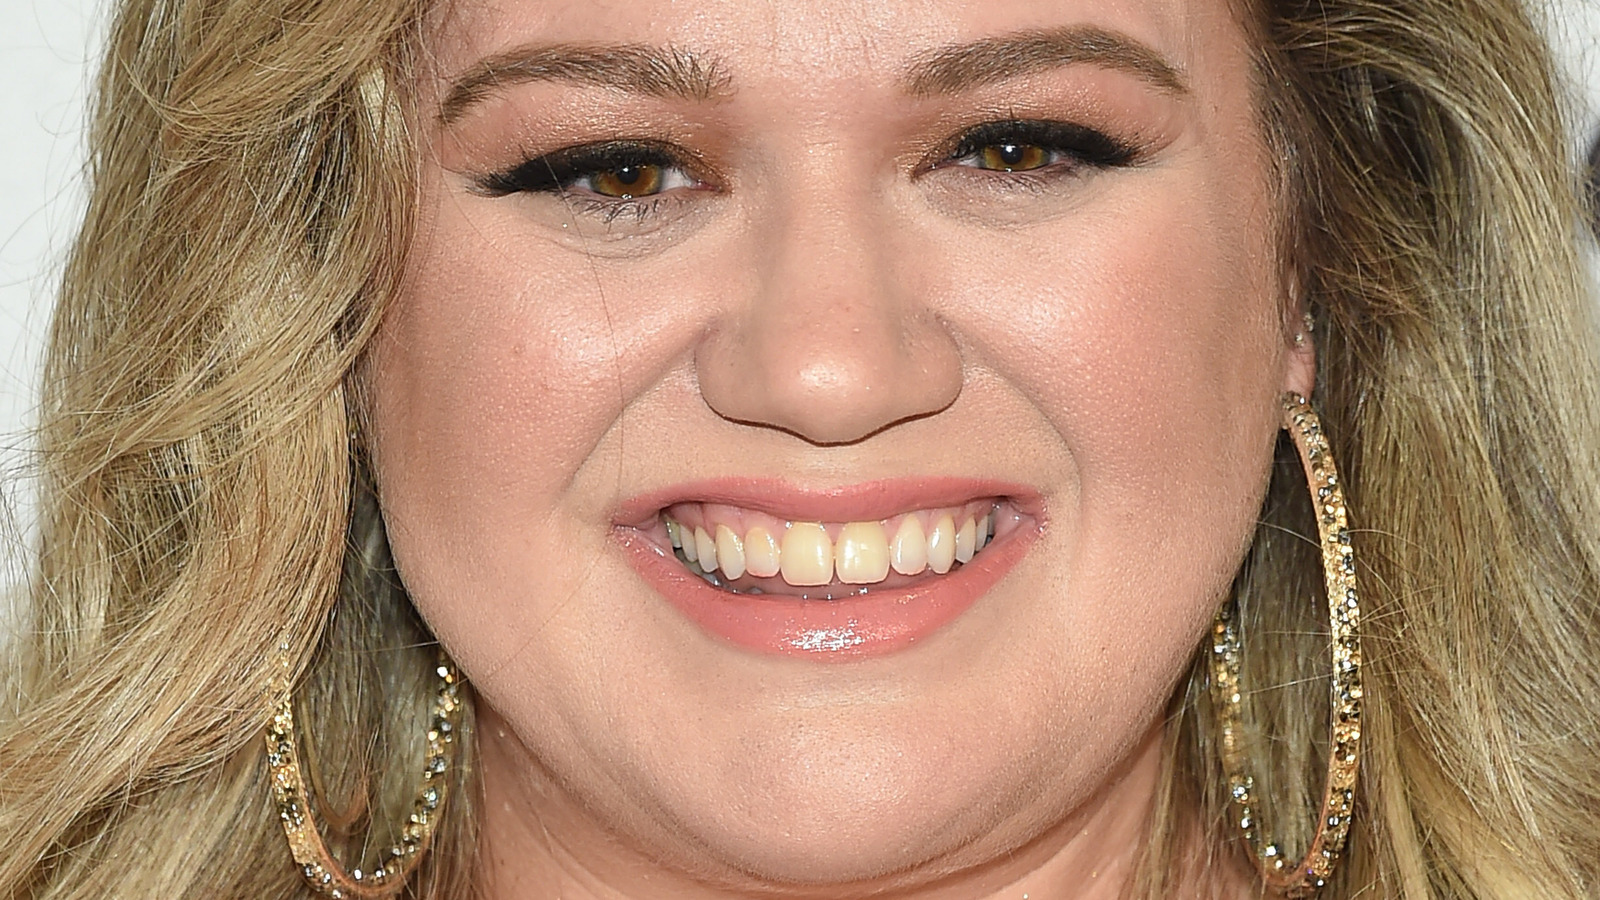 40 Year Old Virgin: Why Steve Carell Screams Kelly Clarkson's Name